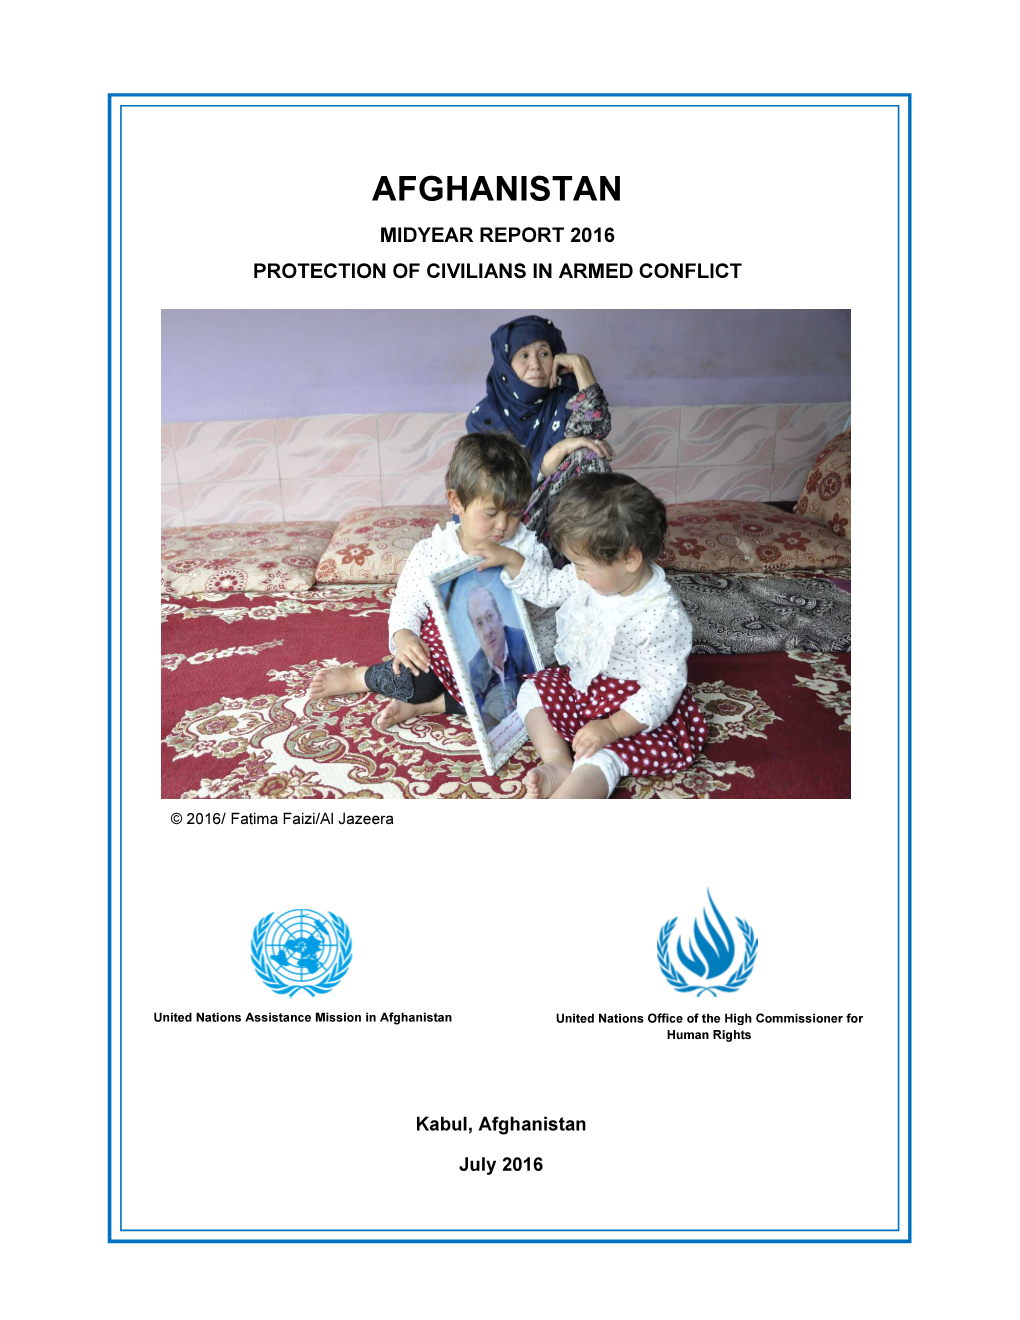 Afghanistan: Midyear Report 2016